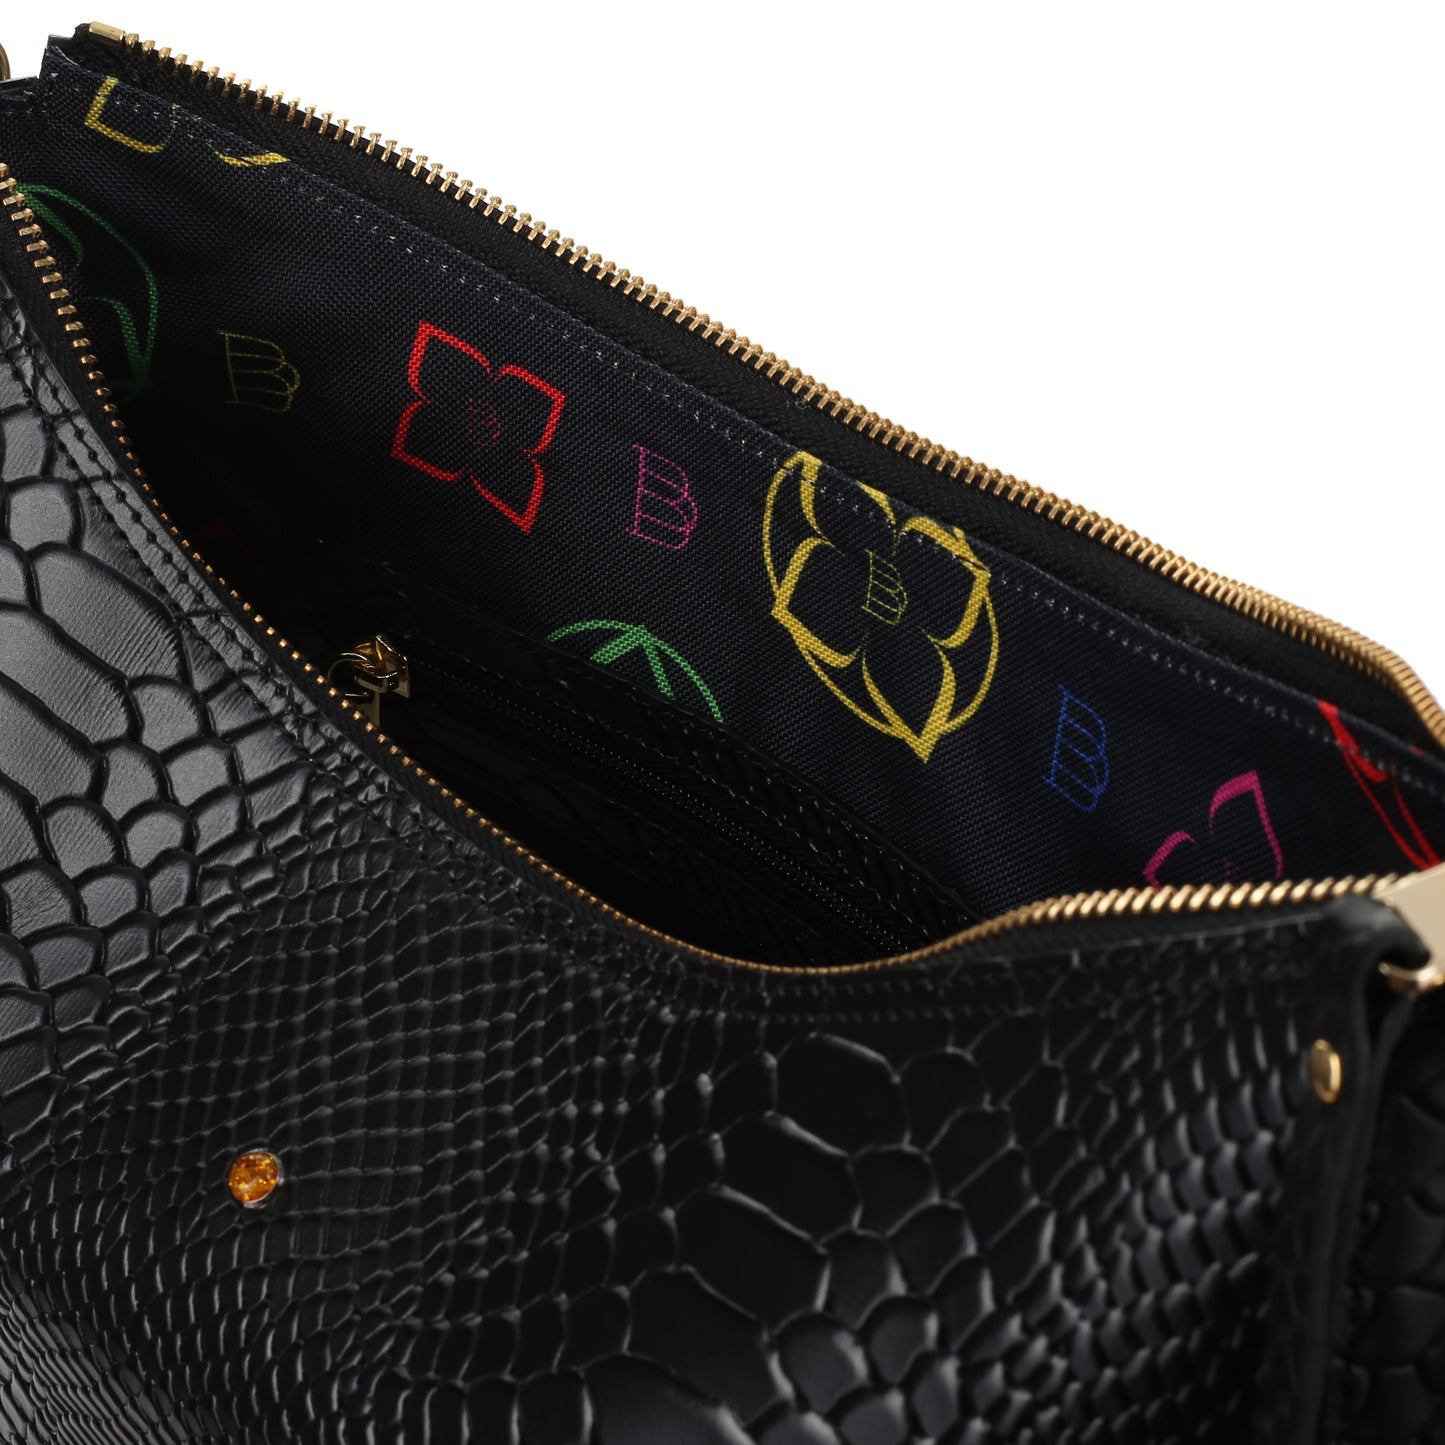 ELYSEE FLOTER BLACK women's leather handbag